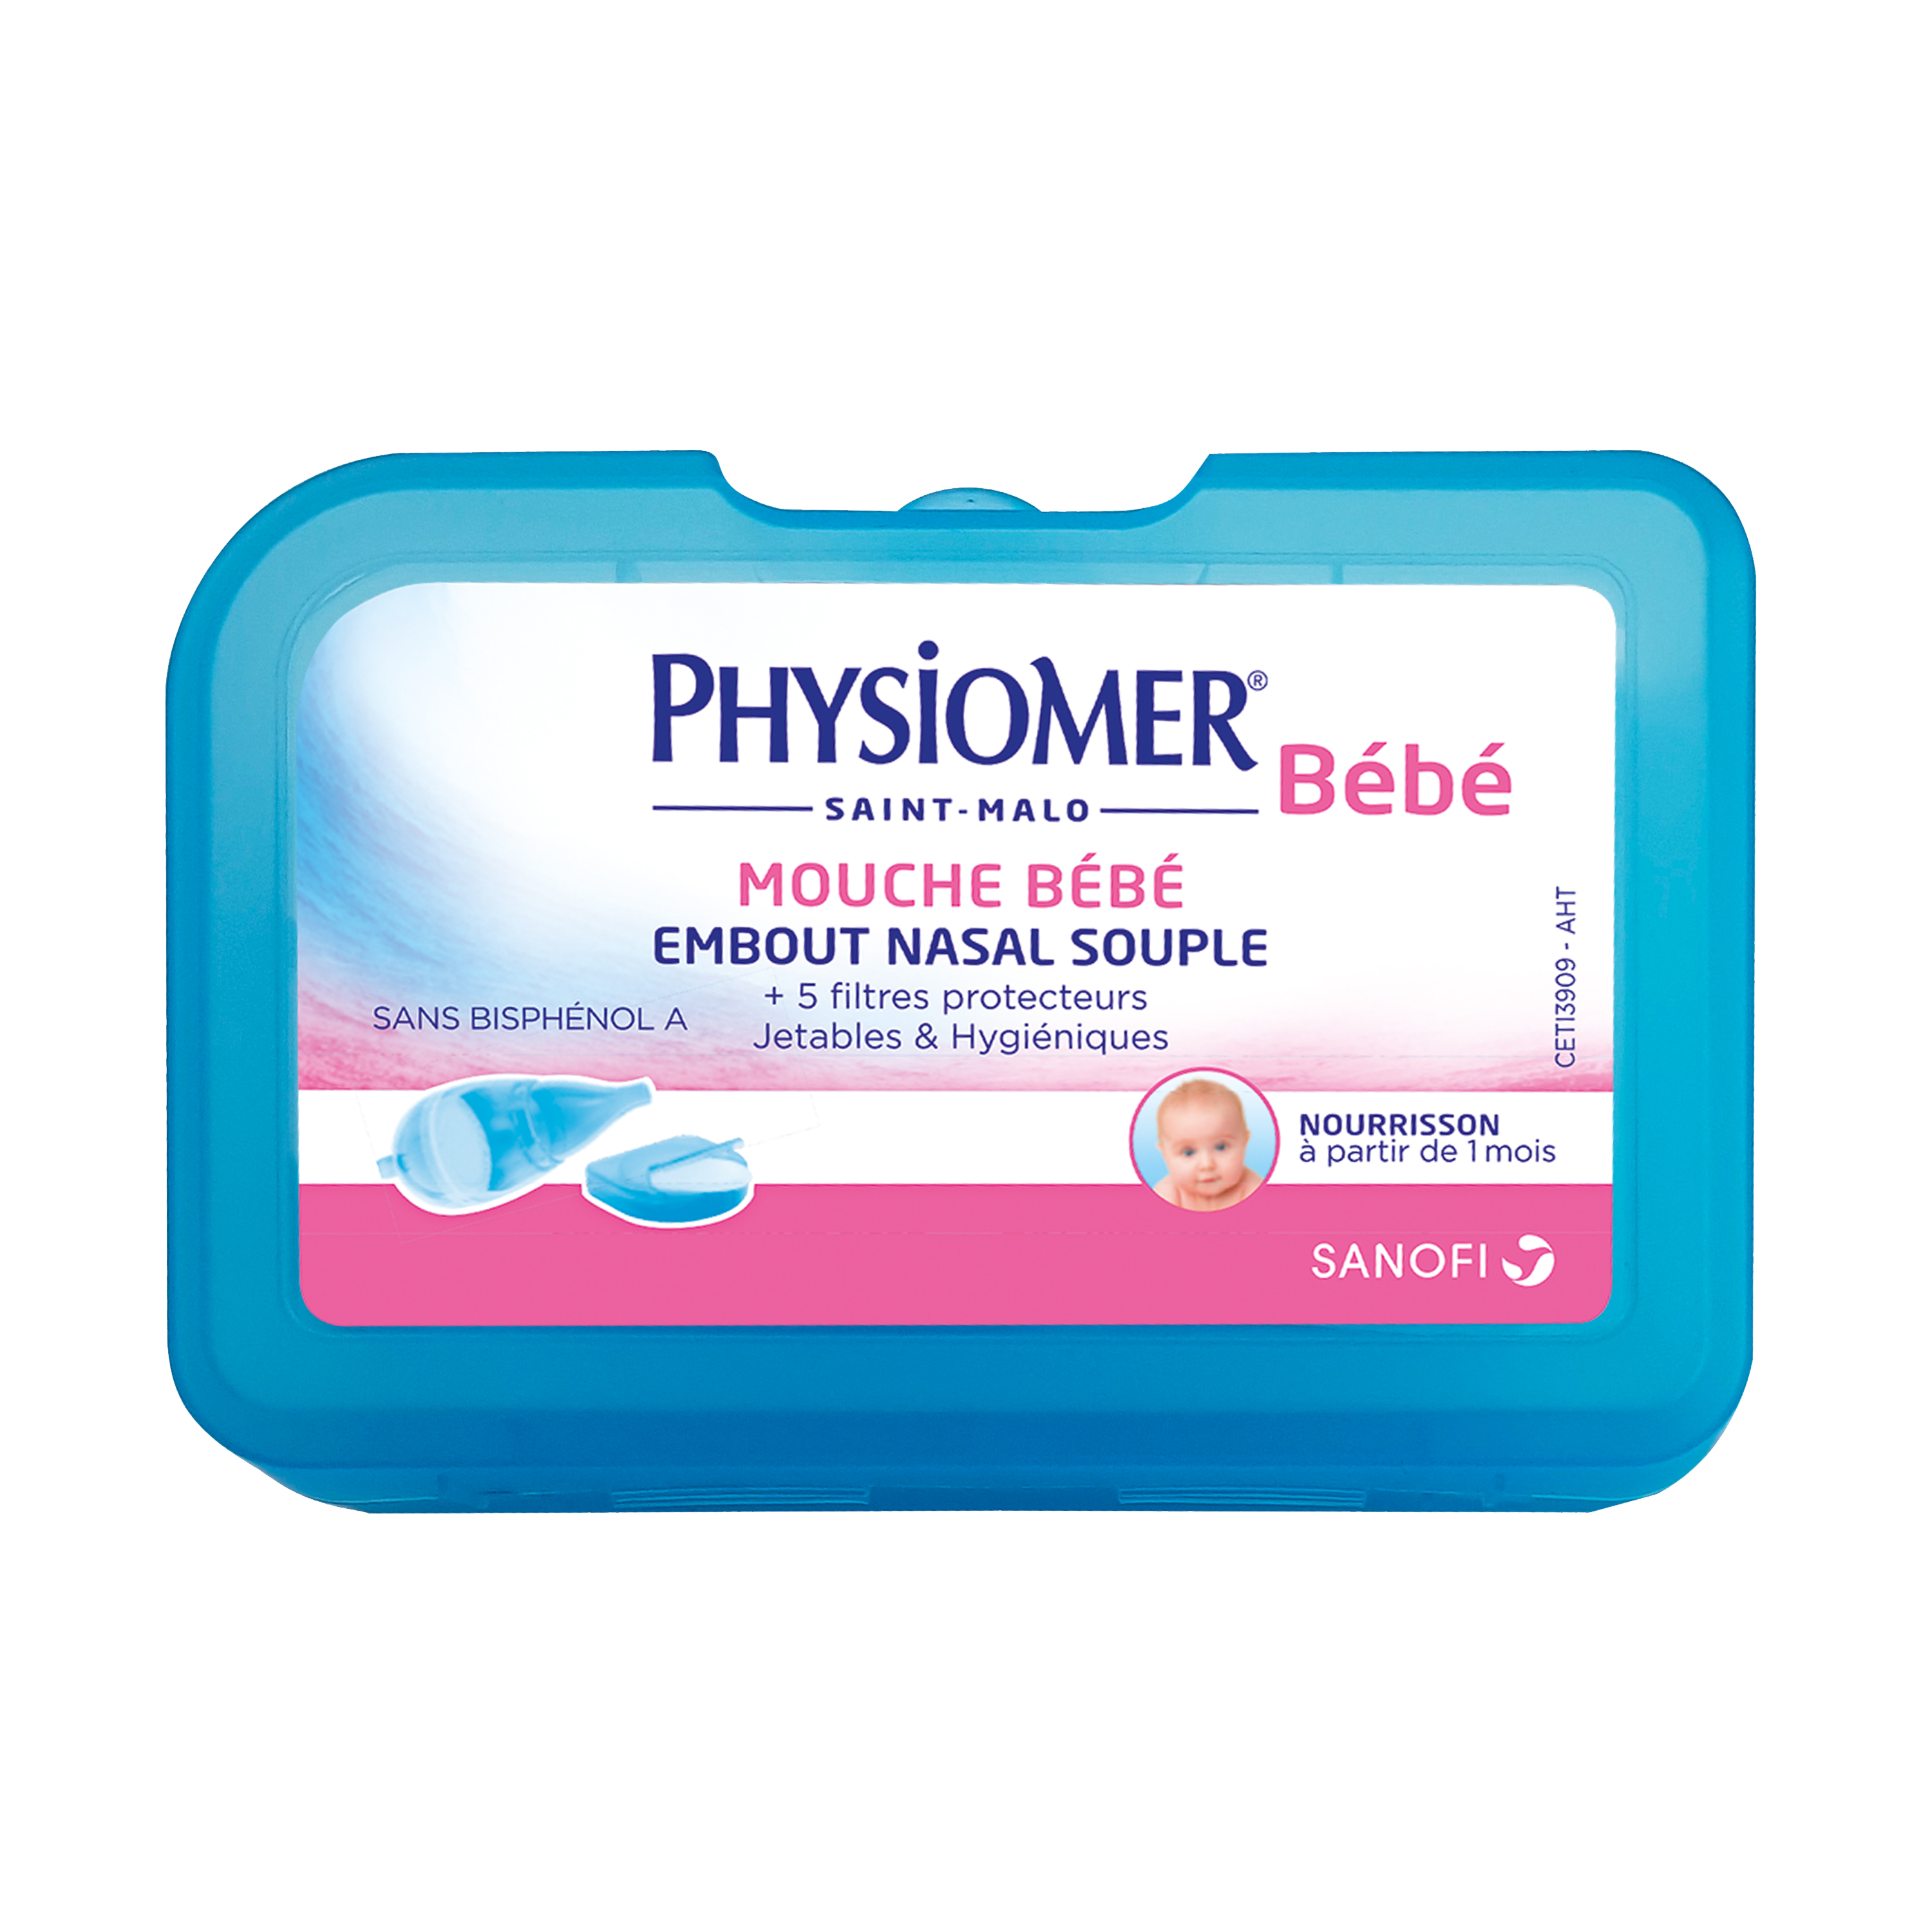 https://www.pharmashopi.com/images/Image/Mouche-bebe-Physiomer-1-mouche-bebe-5-filtres-protecteur-1.jpg